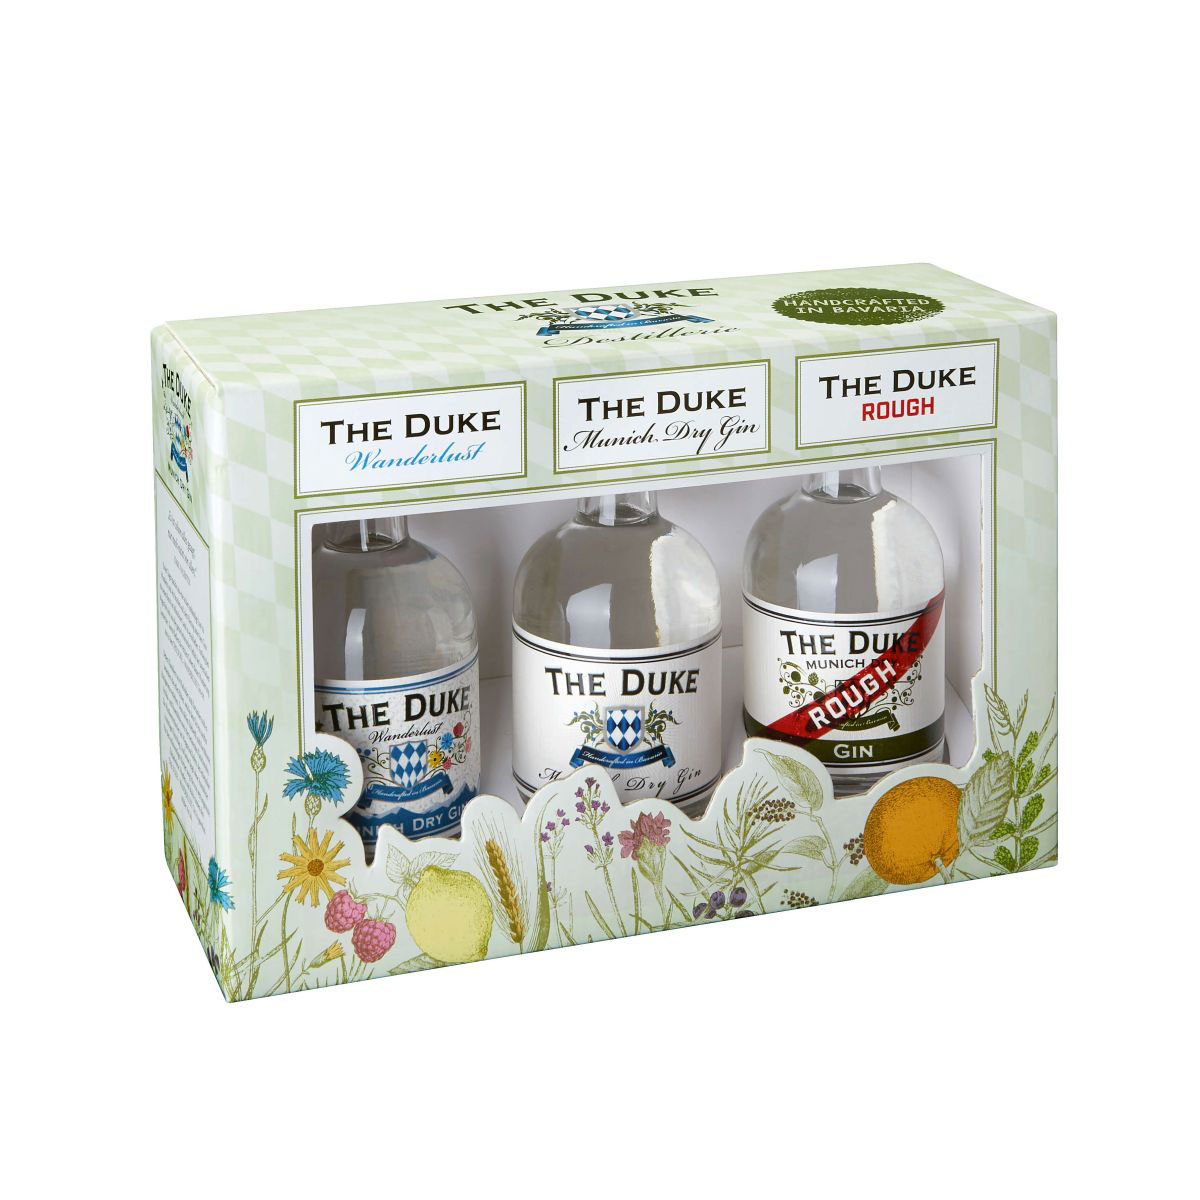 The Duke – Münchener Dry Gin Miniatur Geschenkset 3 x 10cl